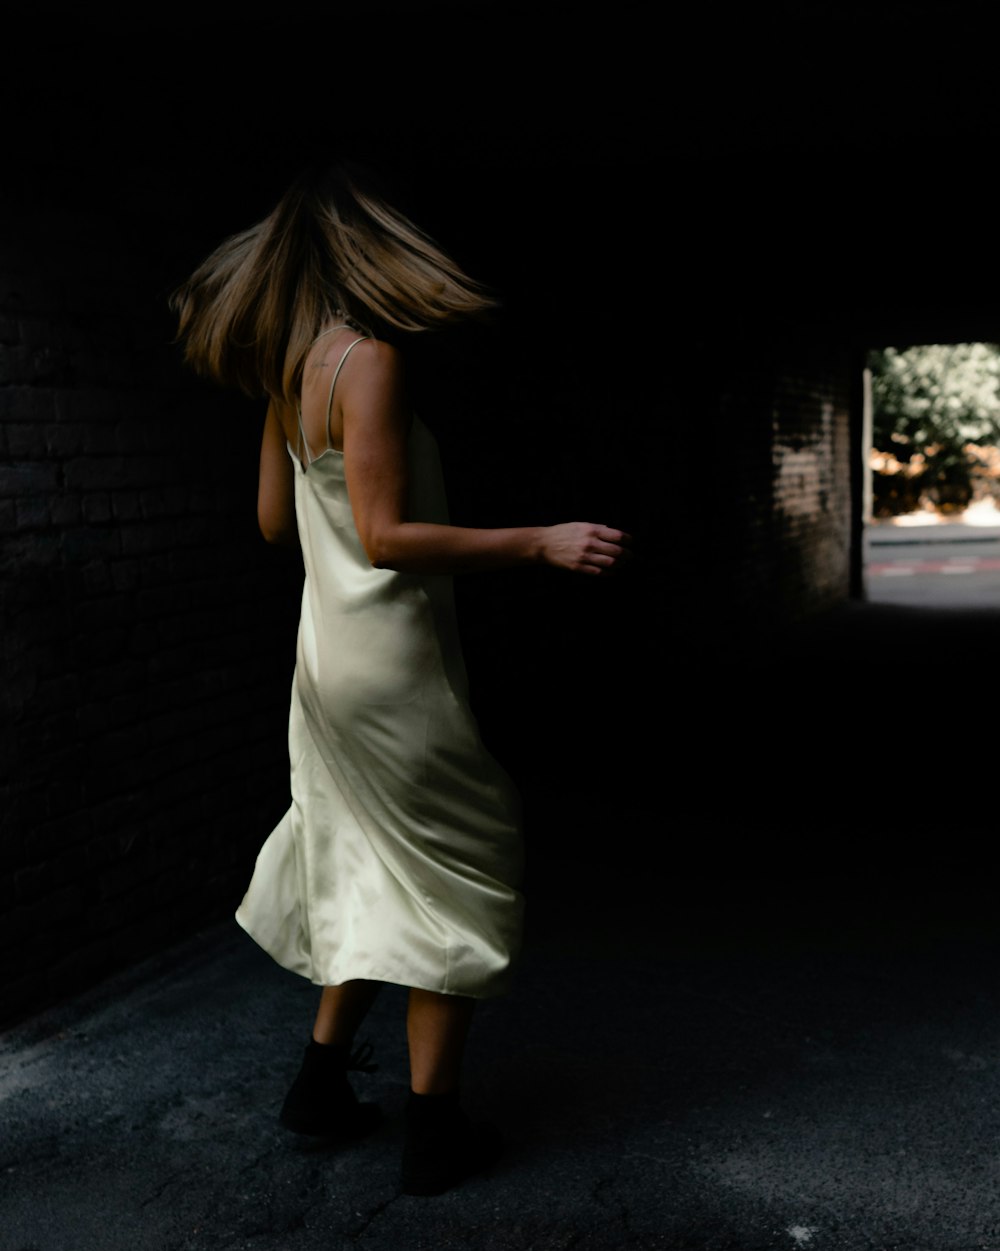 woman in white sleeveless dress standing on black asphalt road during night time